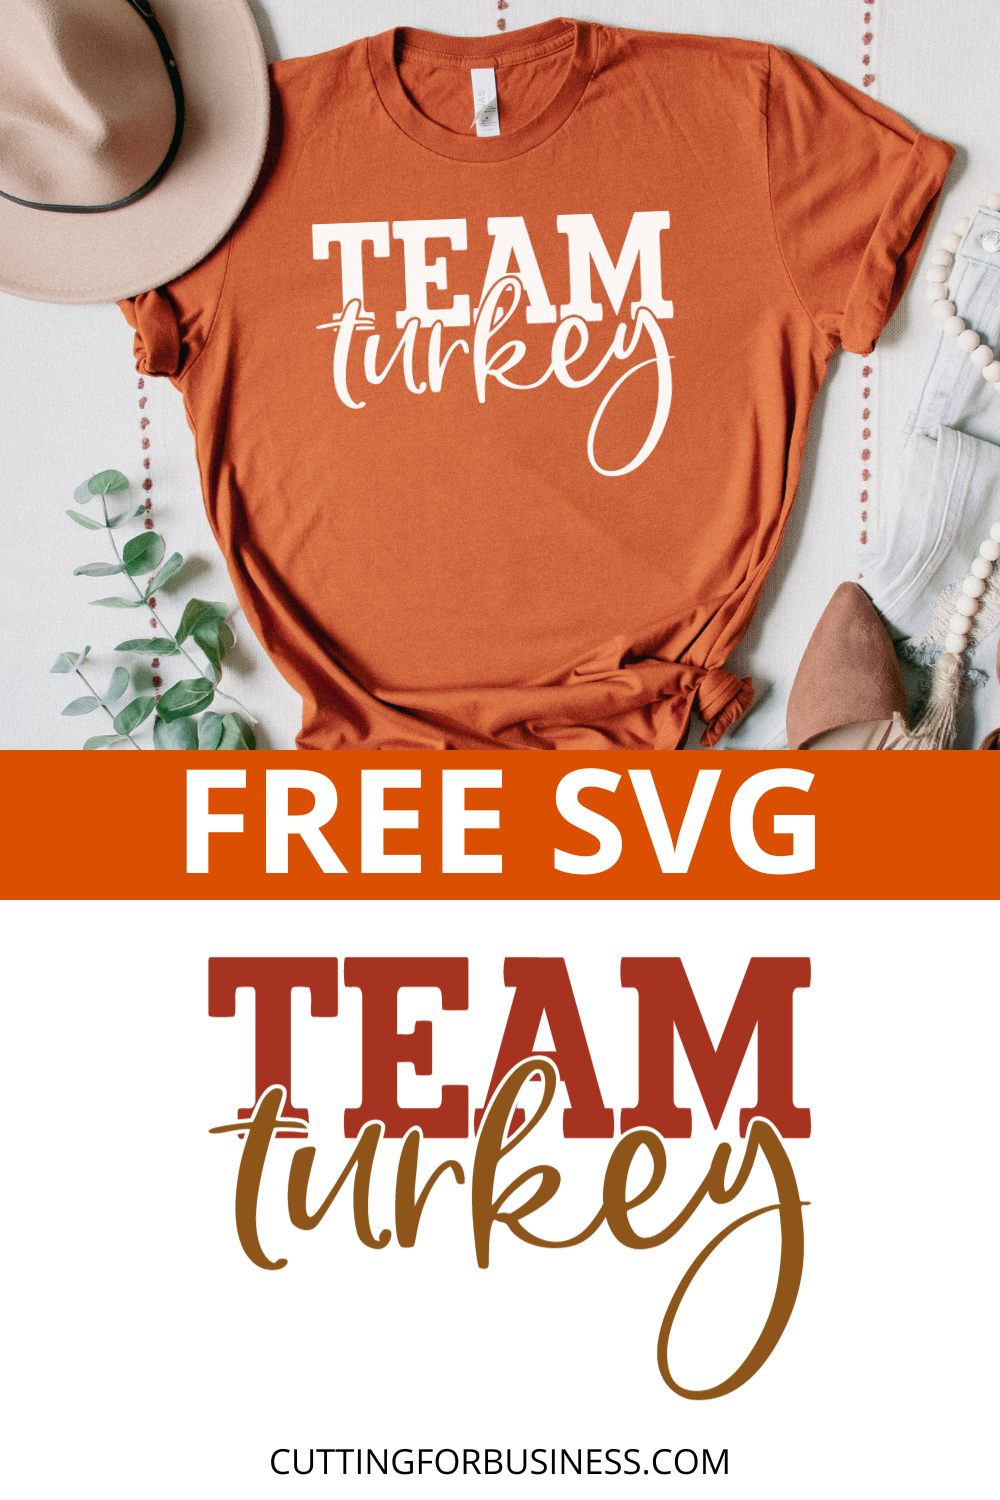 Free Team Turkey SVG - cuttingforbusiness.com.